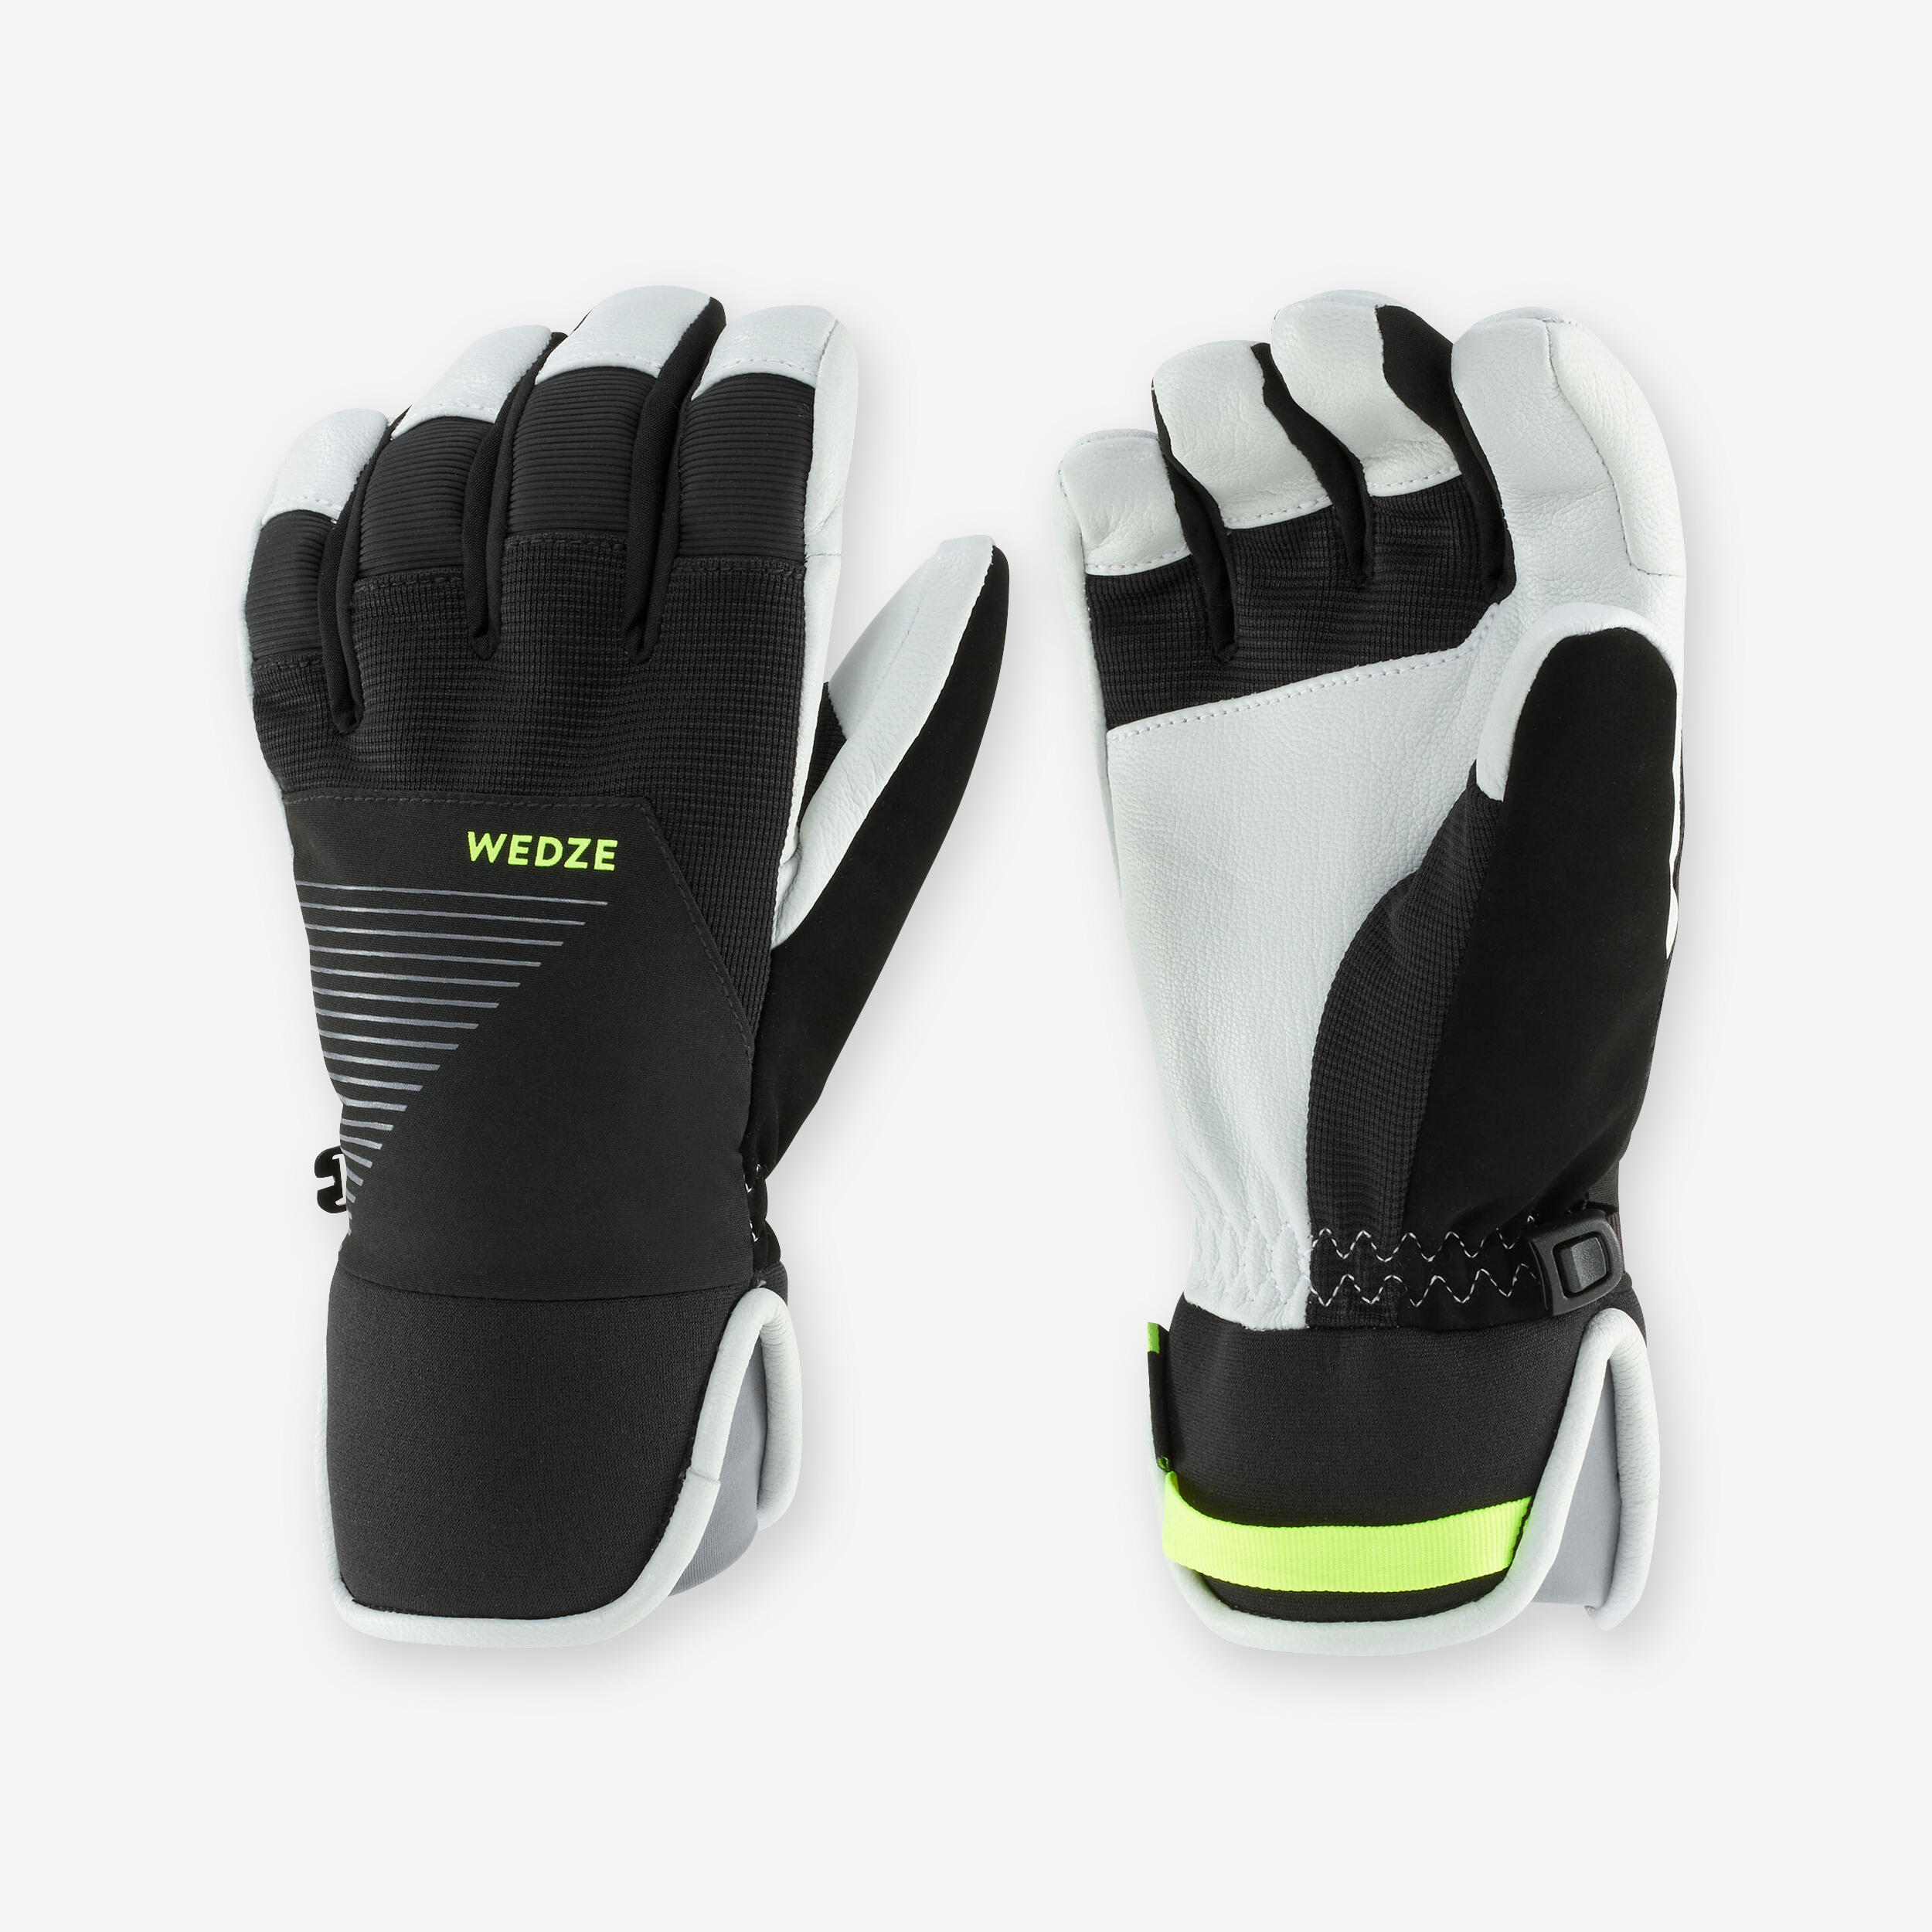 Kids' Ski Gloves and Mittens